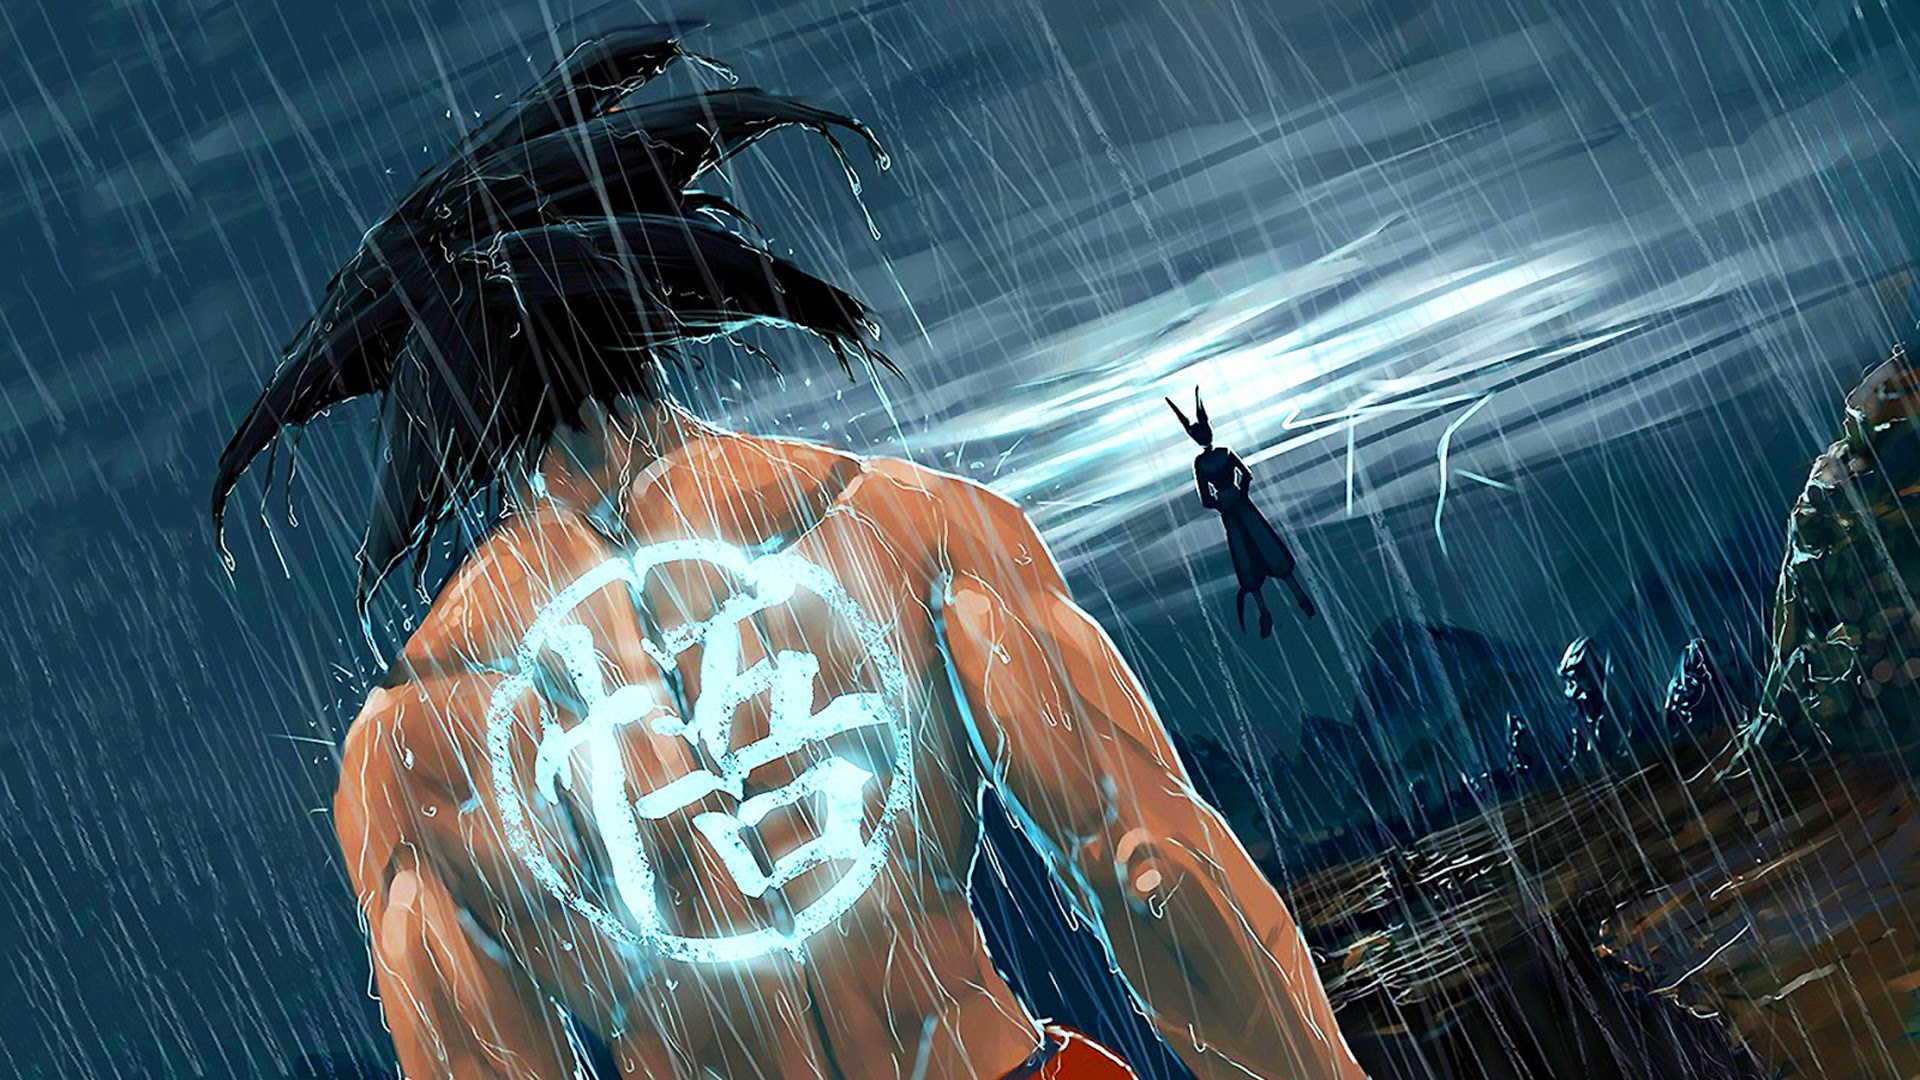 Super Saiyan God Goku battles Beerus amidst rain and lightning, with black hair and a tattoo.